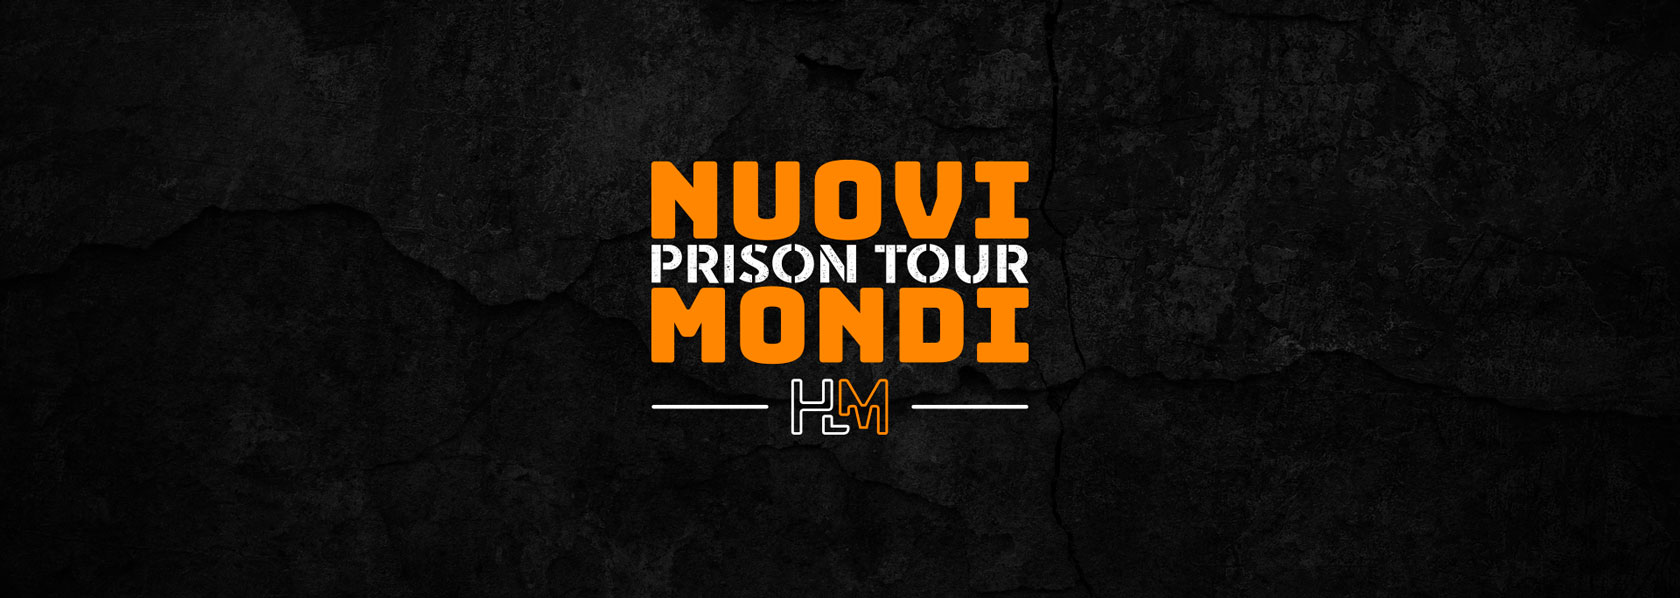 Nuovi Mondi Prison Tour - HOTEL MONROE